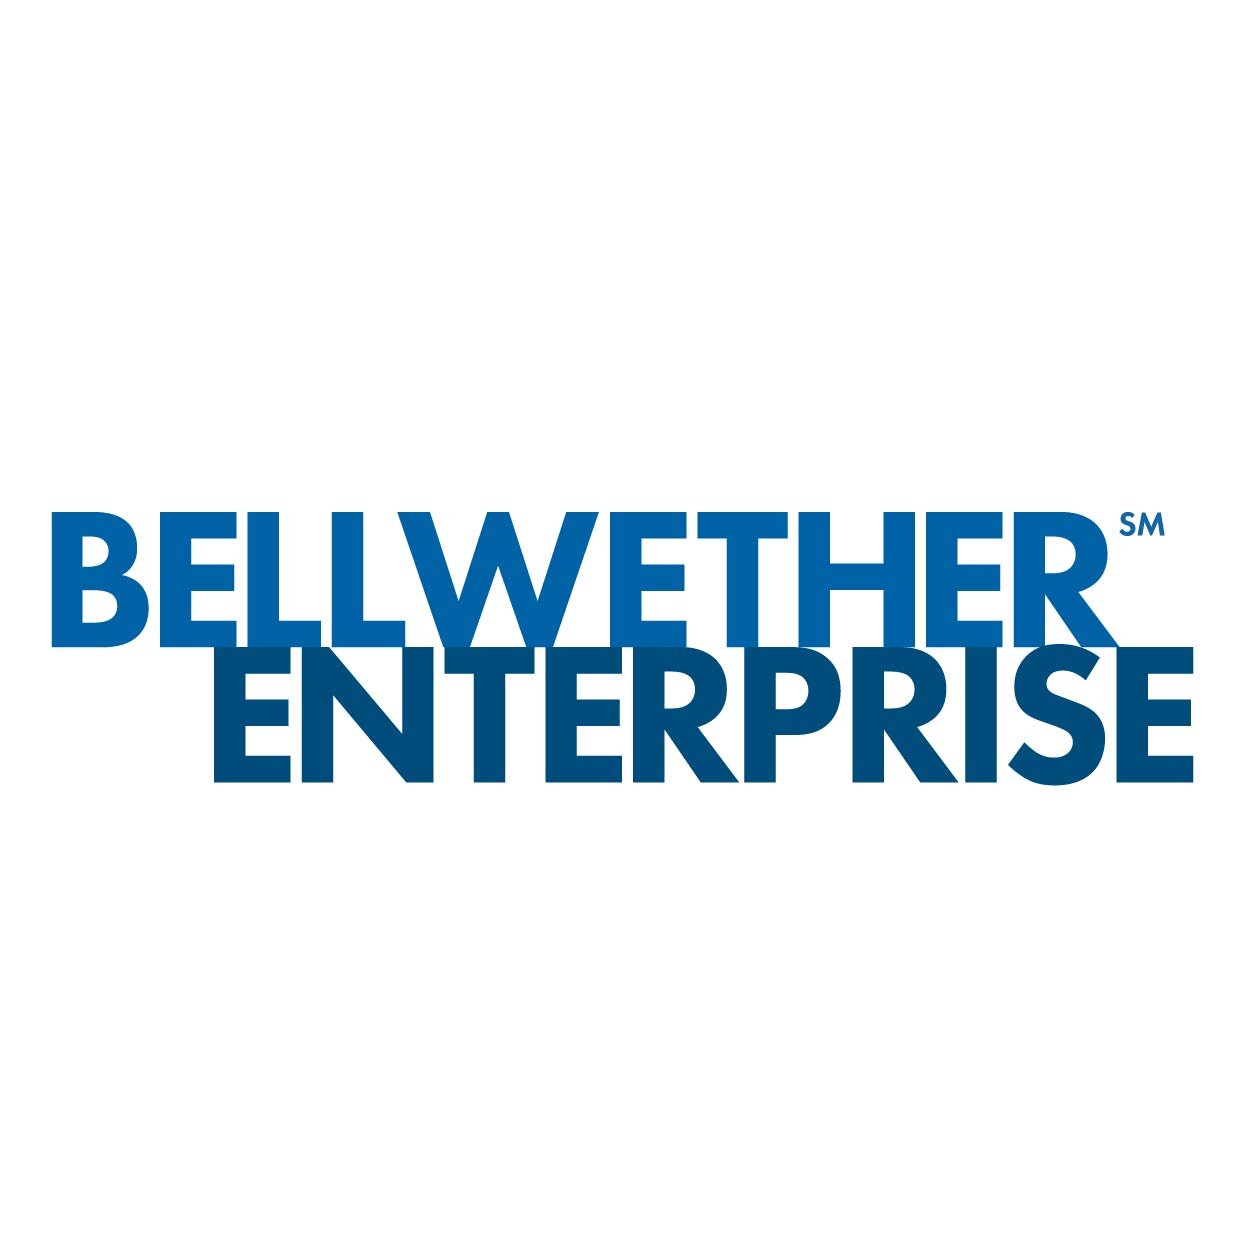 Bellwether Enterprise-01.jpg